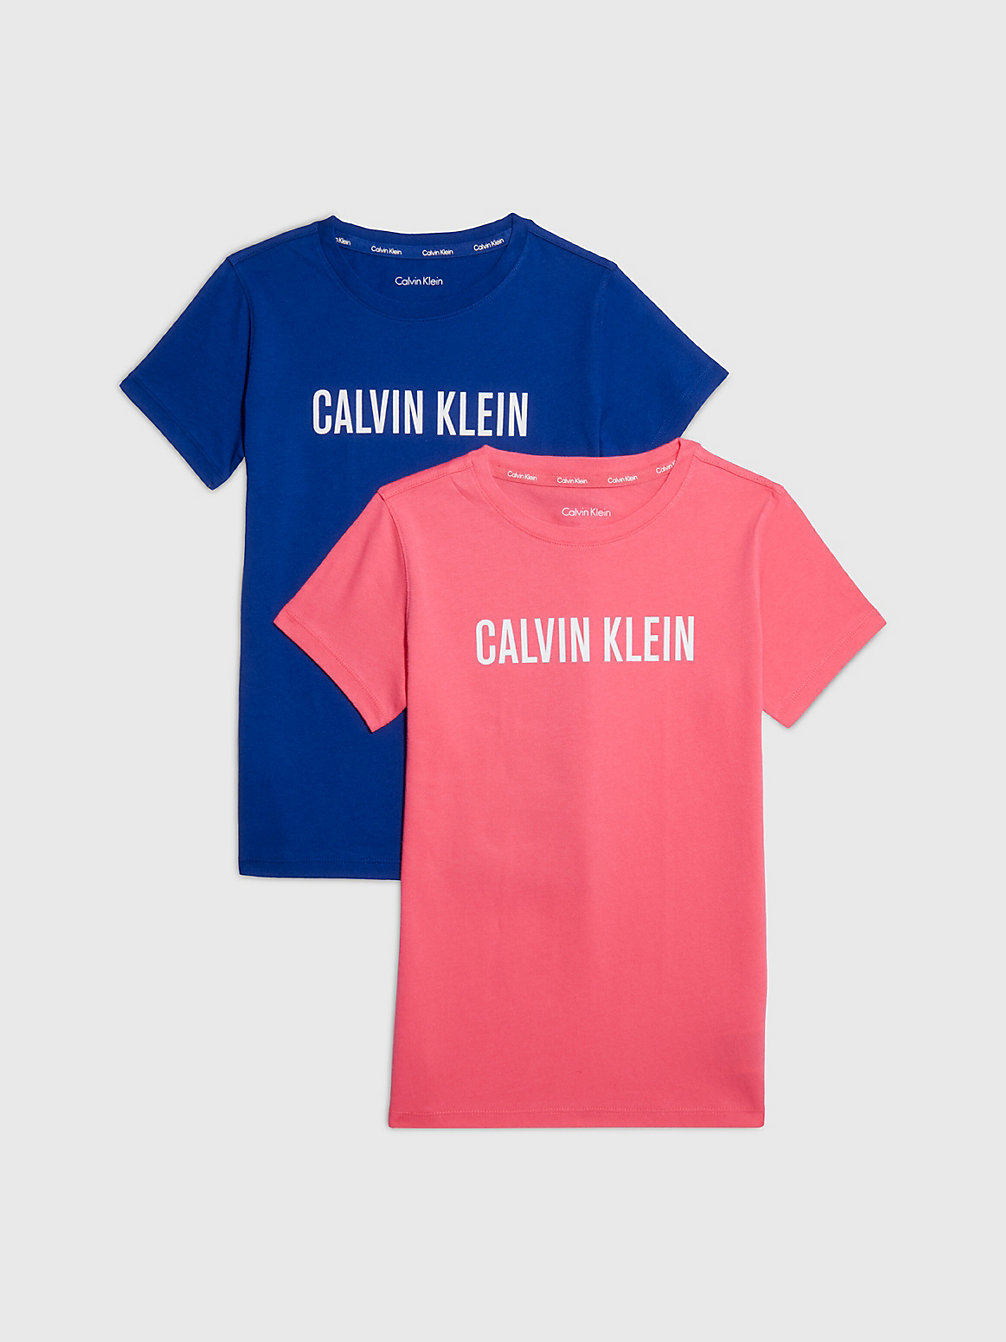 Pack De 2 Camisetas - Intense Power > PINKFLASH/BOLDBLUE > undefined girls > Calvin Klein